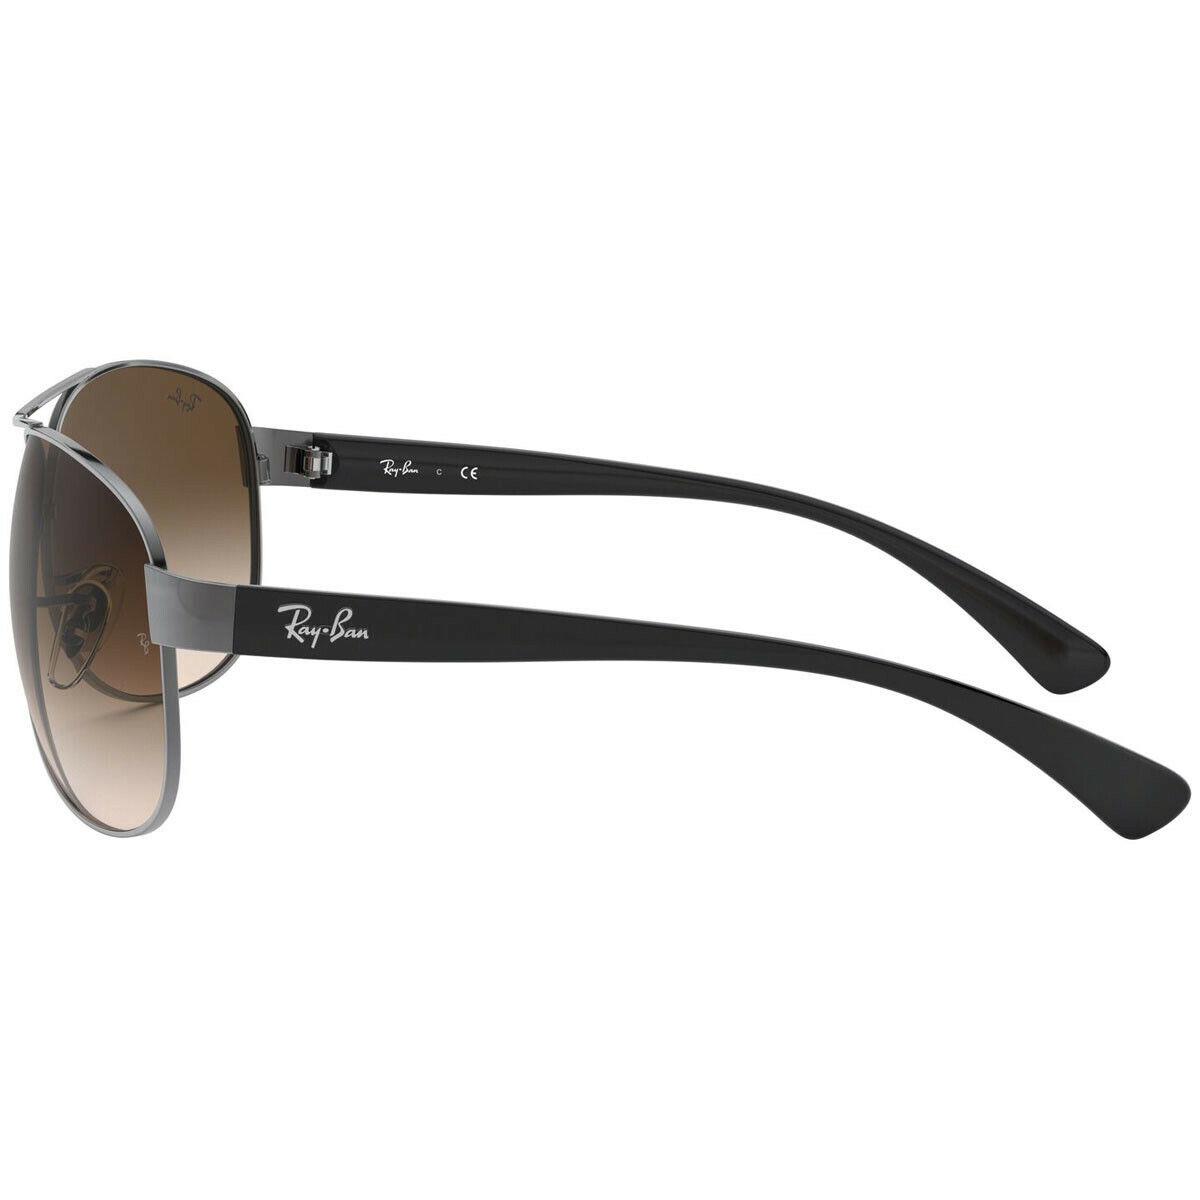 Ray-Ban sunglasses  - Gunmetal /Black Frame, Brown Lens